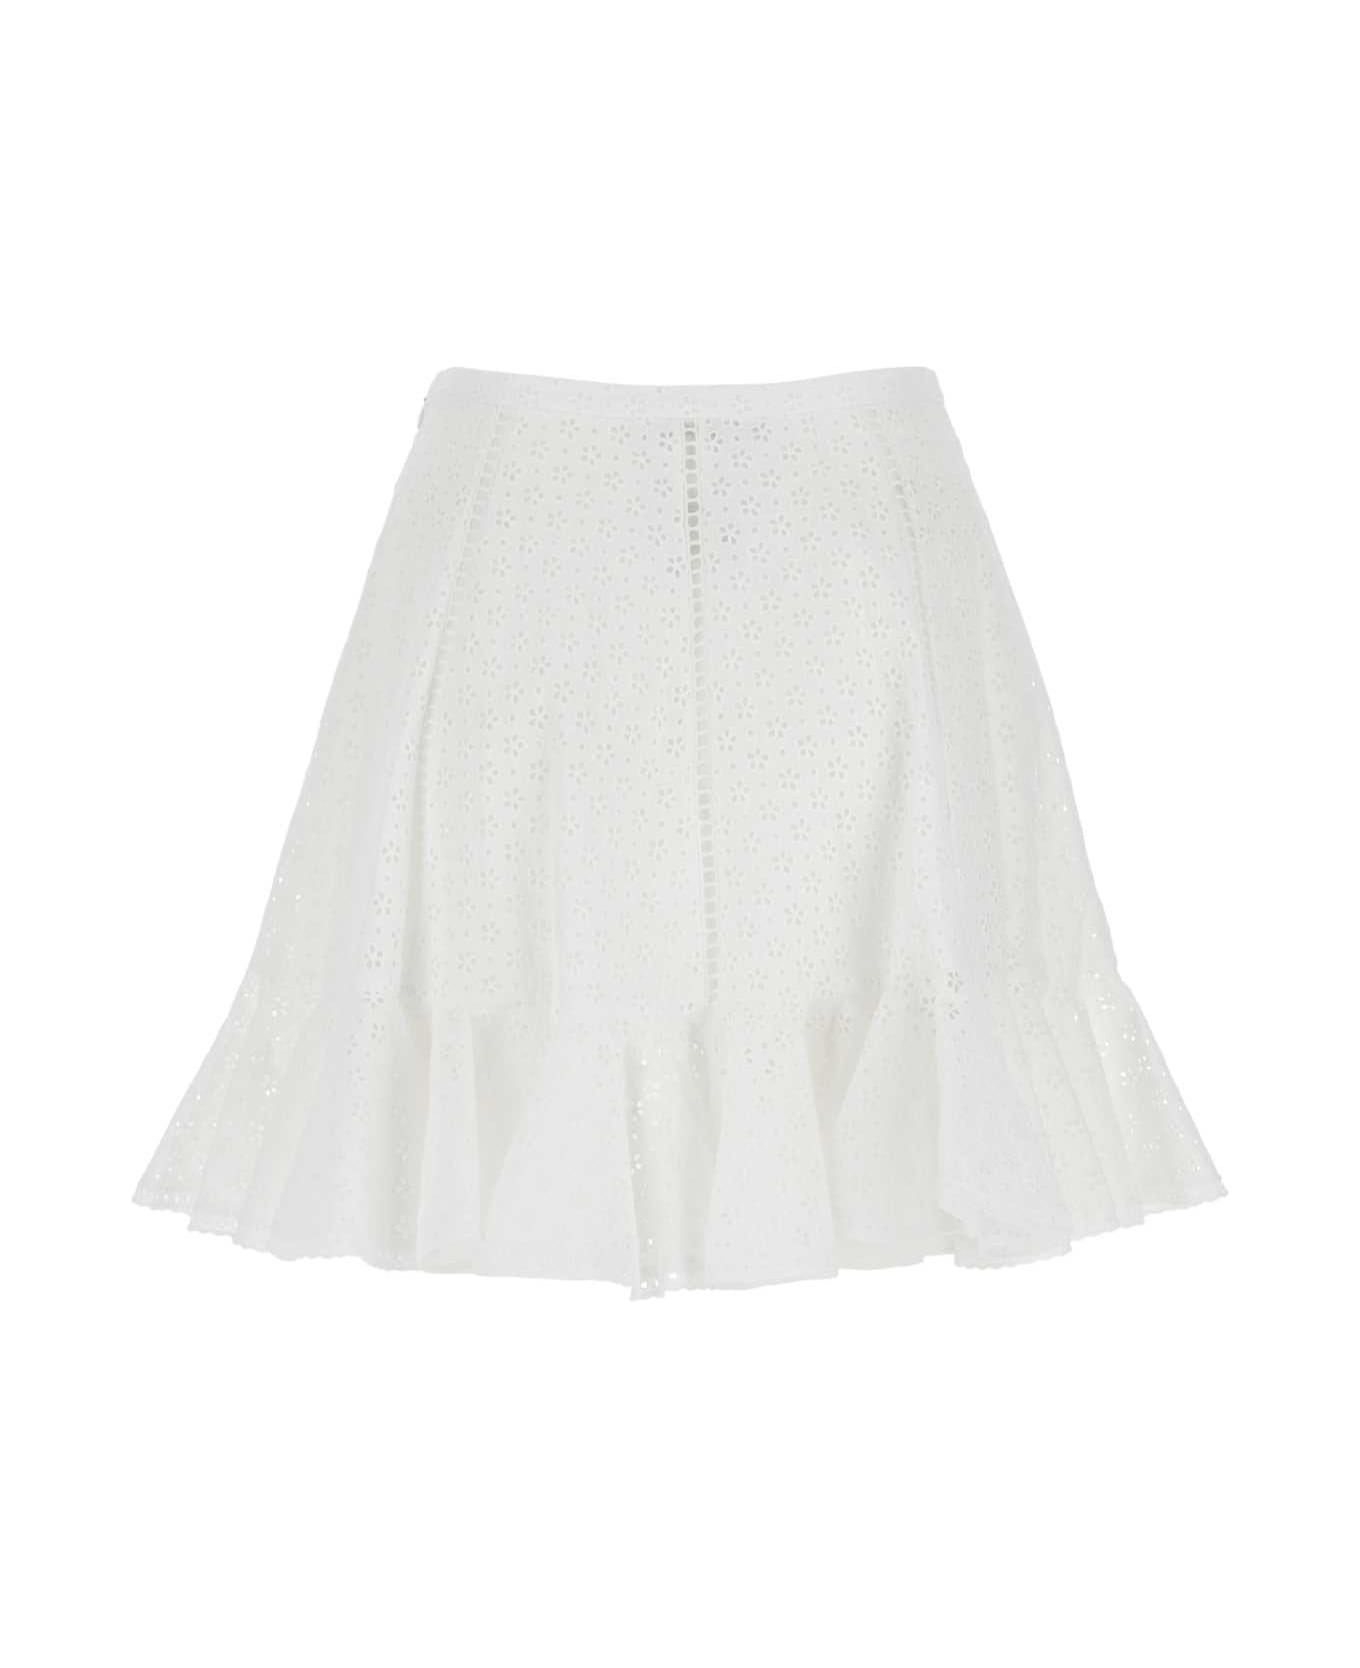 Philosophy di Lorenzo Serafini White Broderie Anglaise Skirt - White スカート